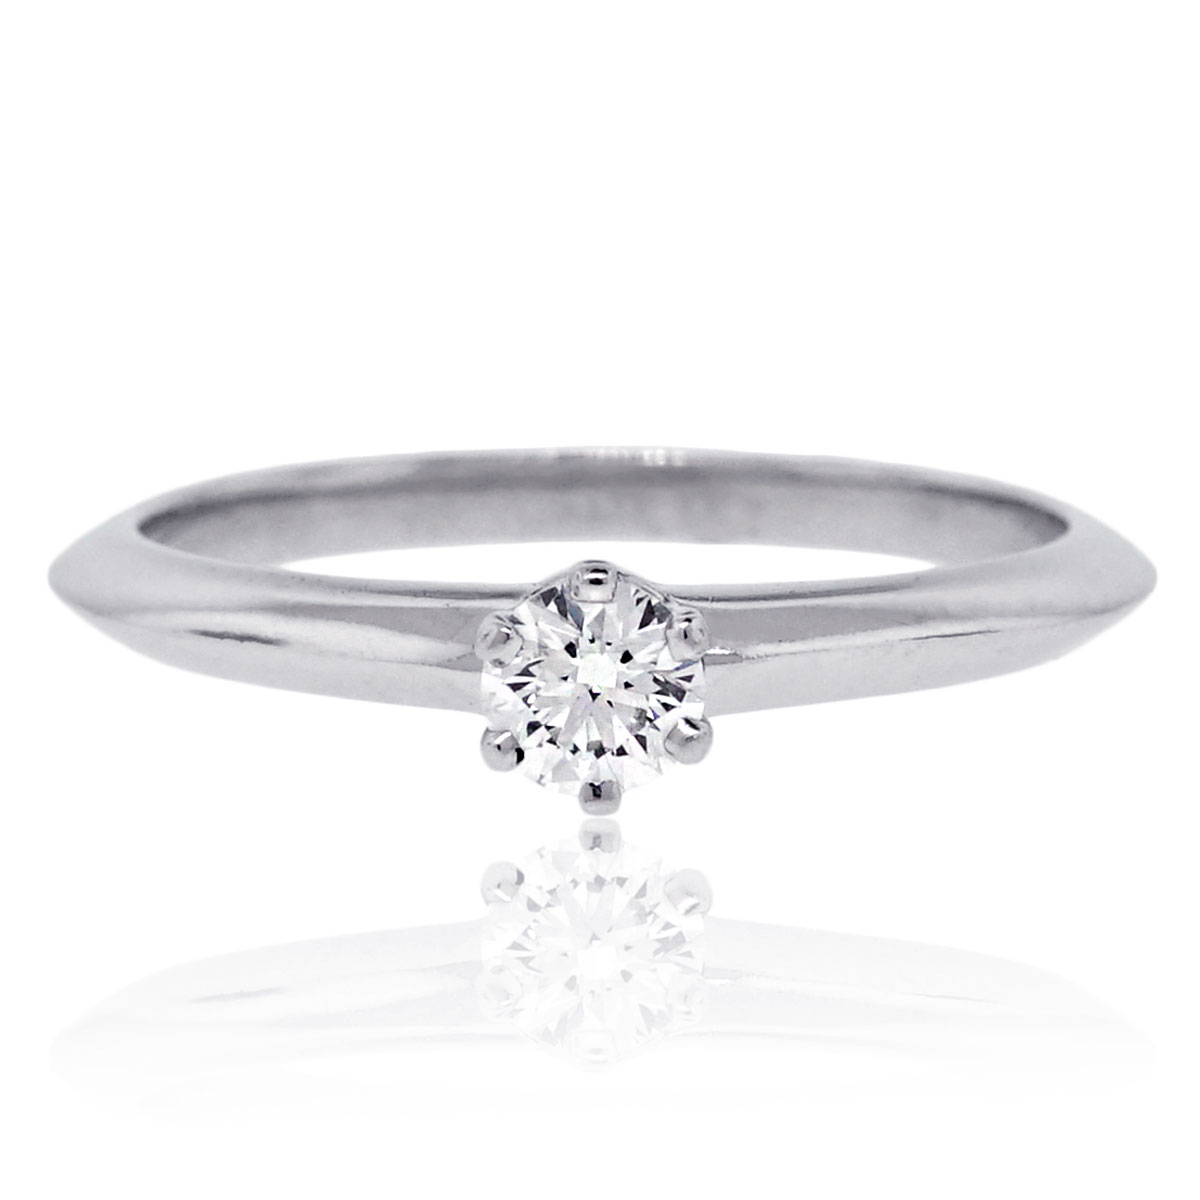 Tiffany & Co. engagement ring